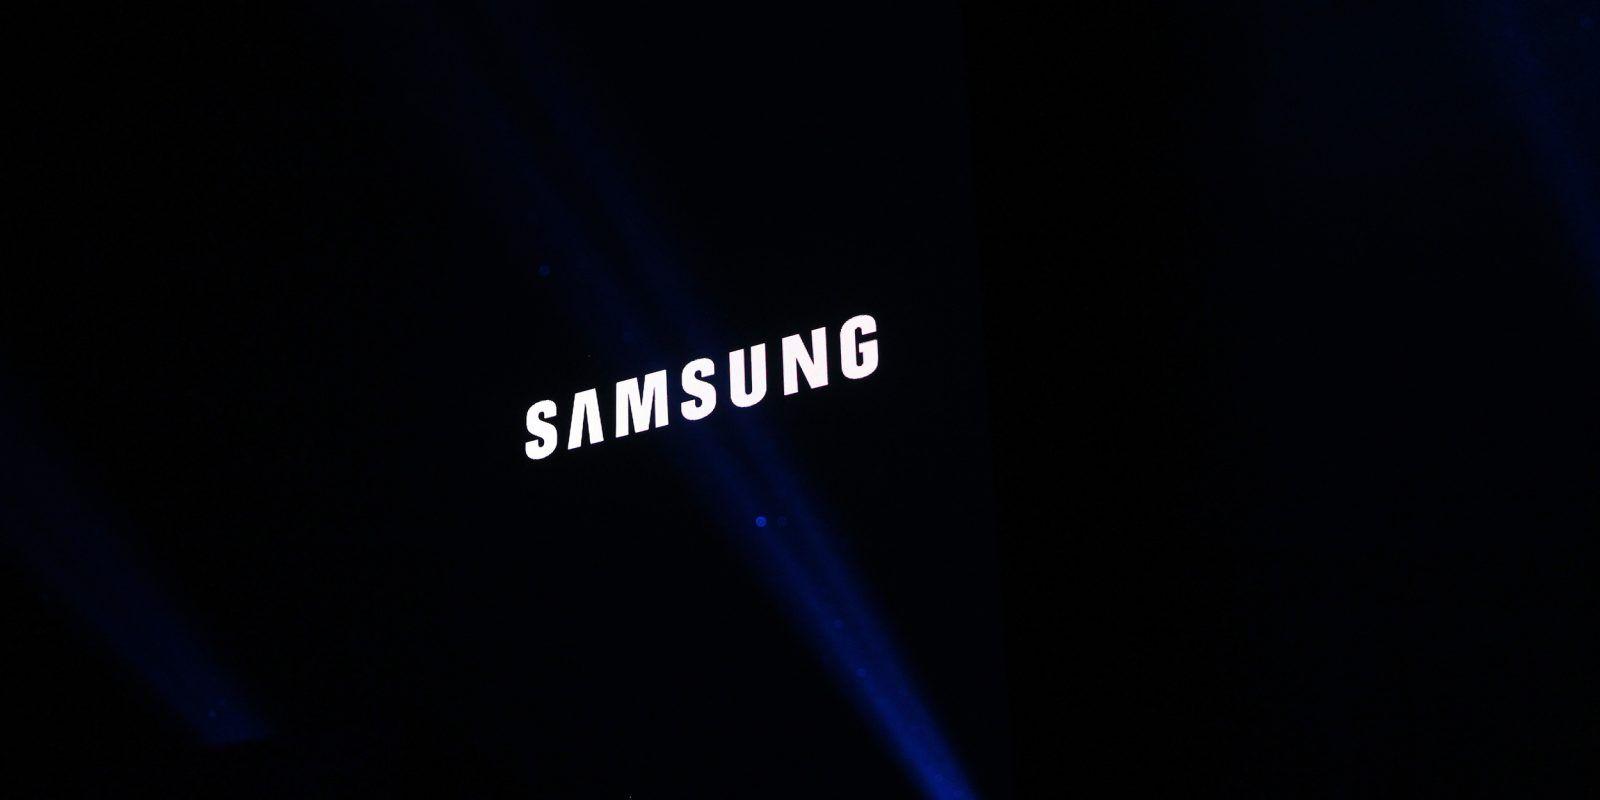 Bixby Samsung Logo - Samsung's Bixby smart speaker may arrive alongside Galaxy Note to